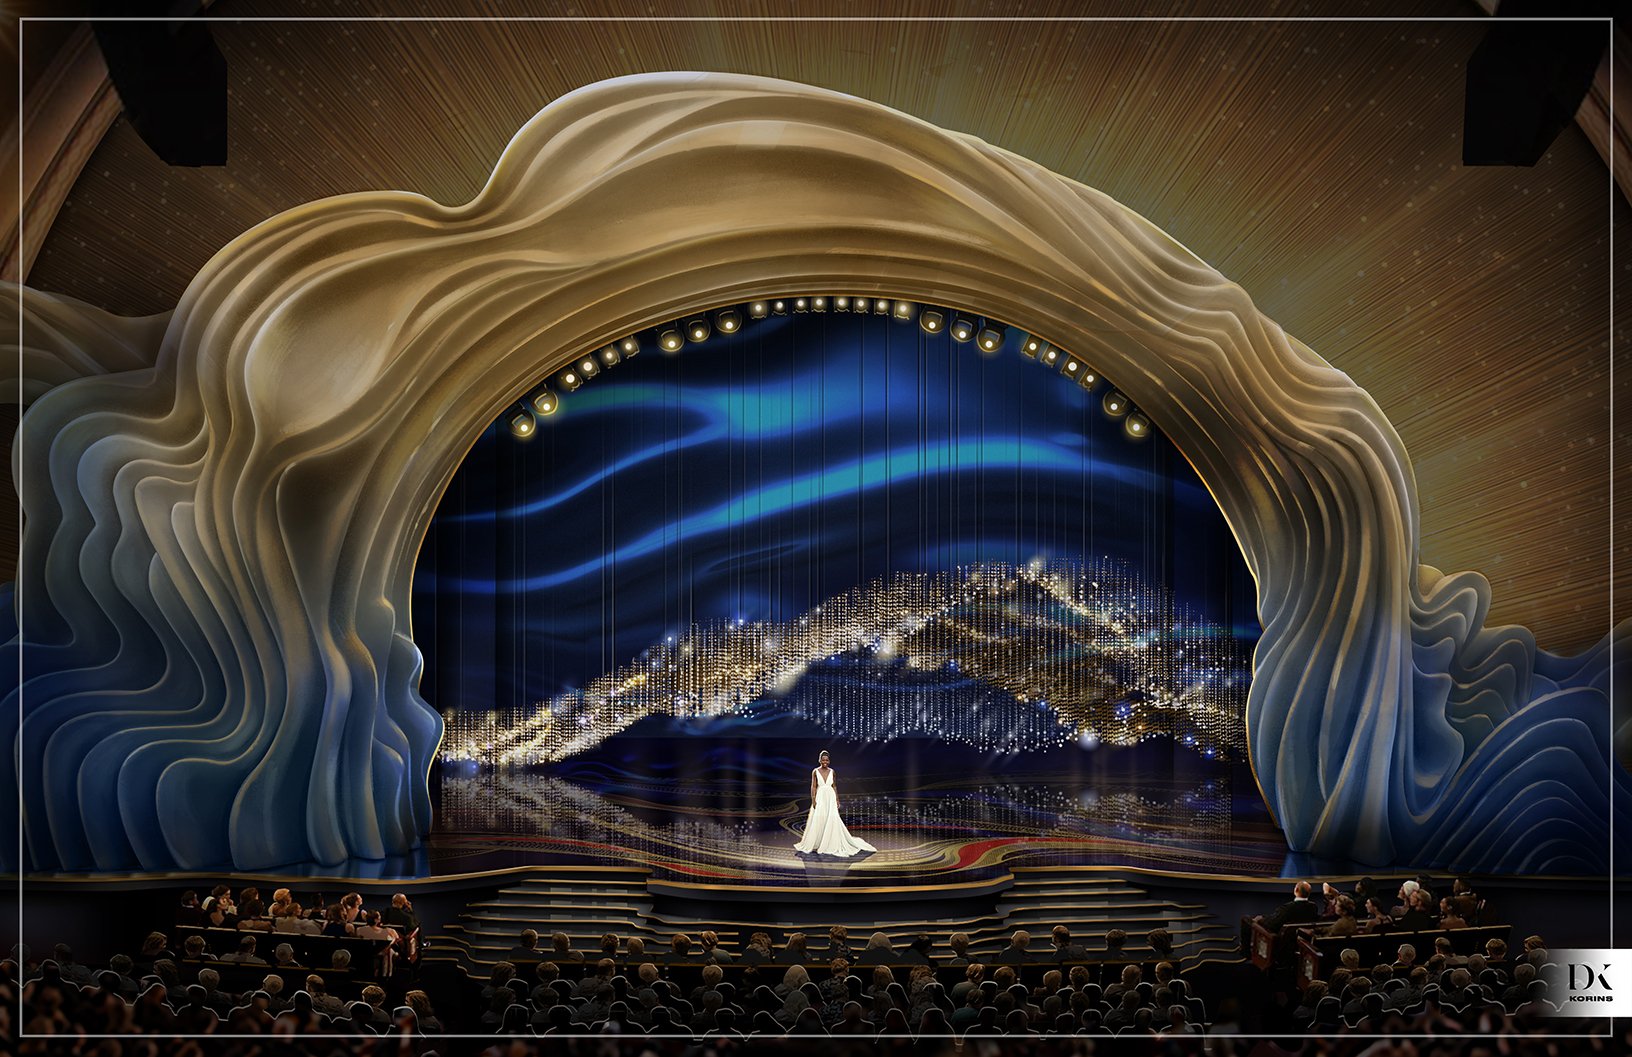 2019 Oscars stage design rendering